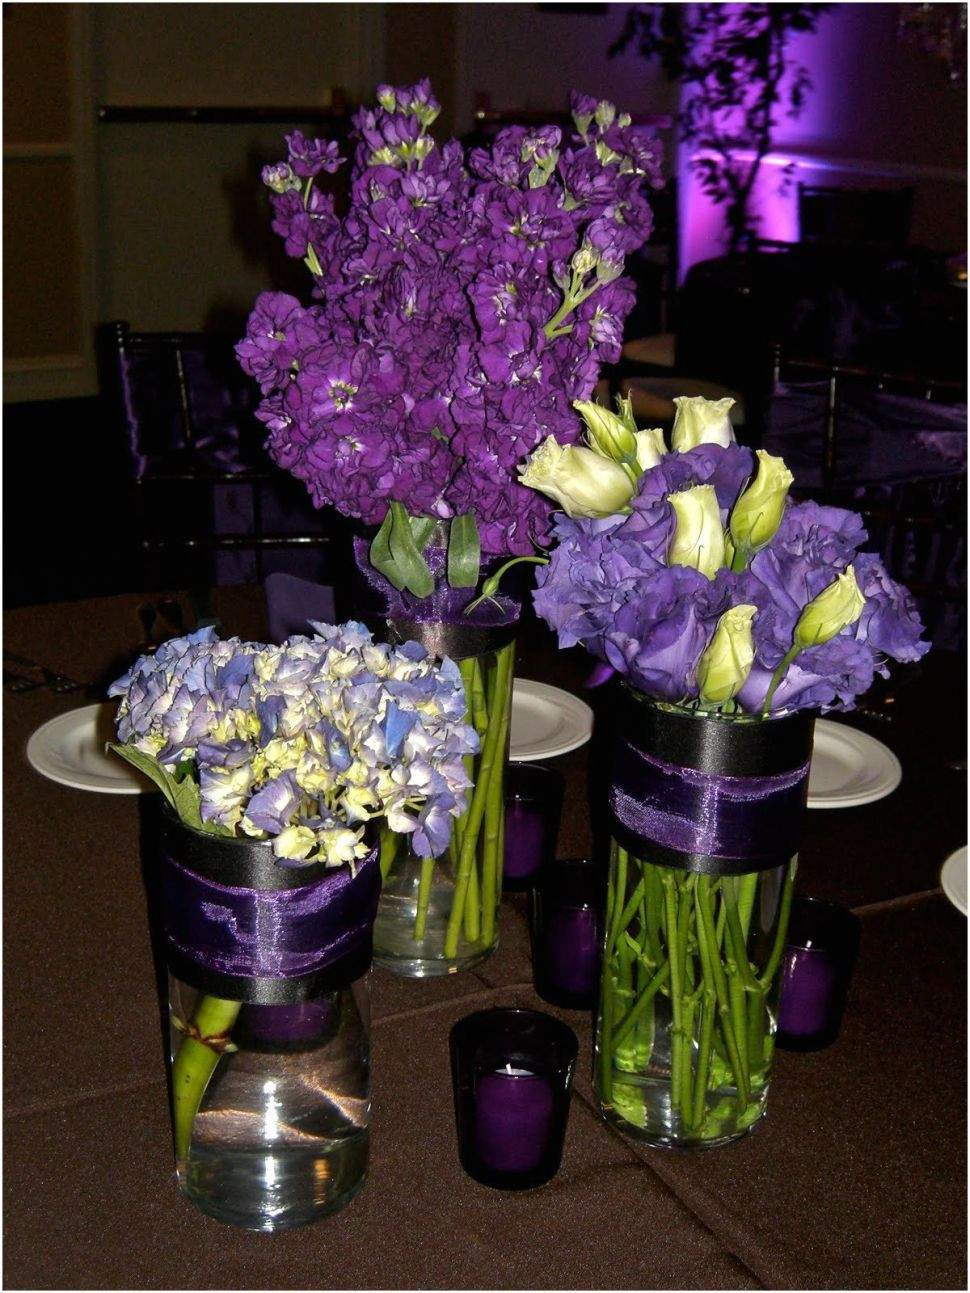 17 Trendy 4ft Glass Vase 2024 free download 4ft glass vase of purple flower vase images wedding flowers near me lovely awesome in purple flower vase photos purple silk flowers stupendous dsc 1329h vases purple previ 0d floor of